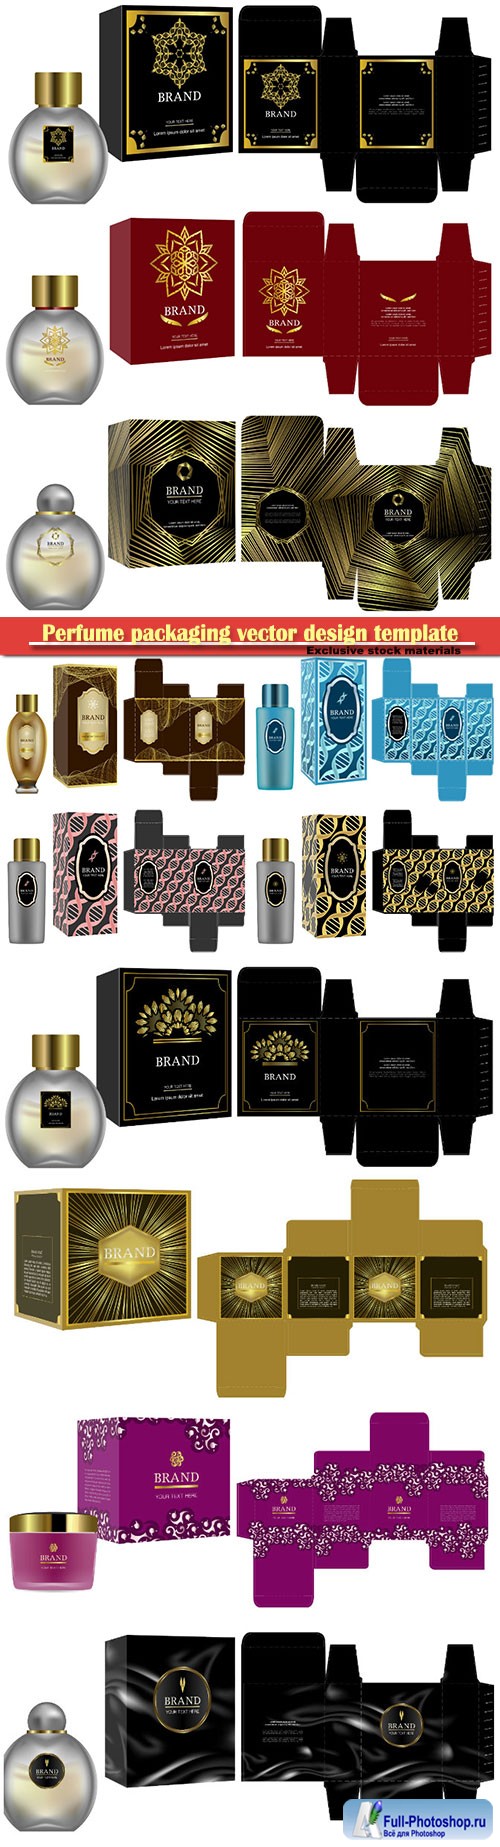 Perfume packaging vector design template